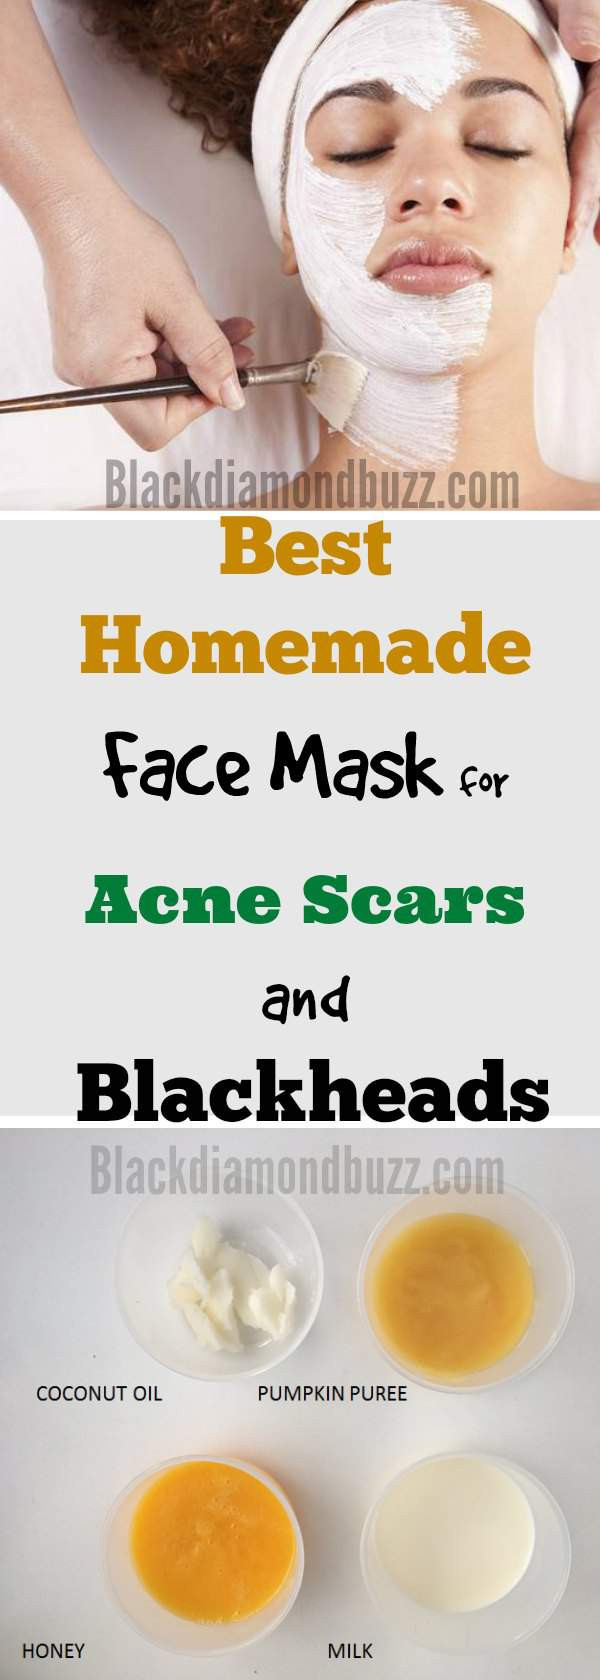 DIY Mask For Acne
 DIY Face Mask for Acne 7 Best Homemade Face Masks